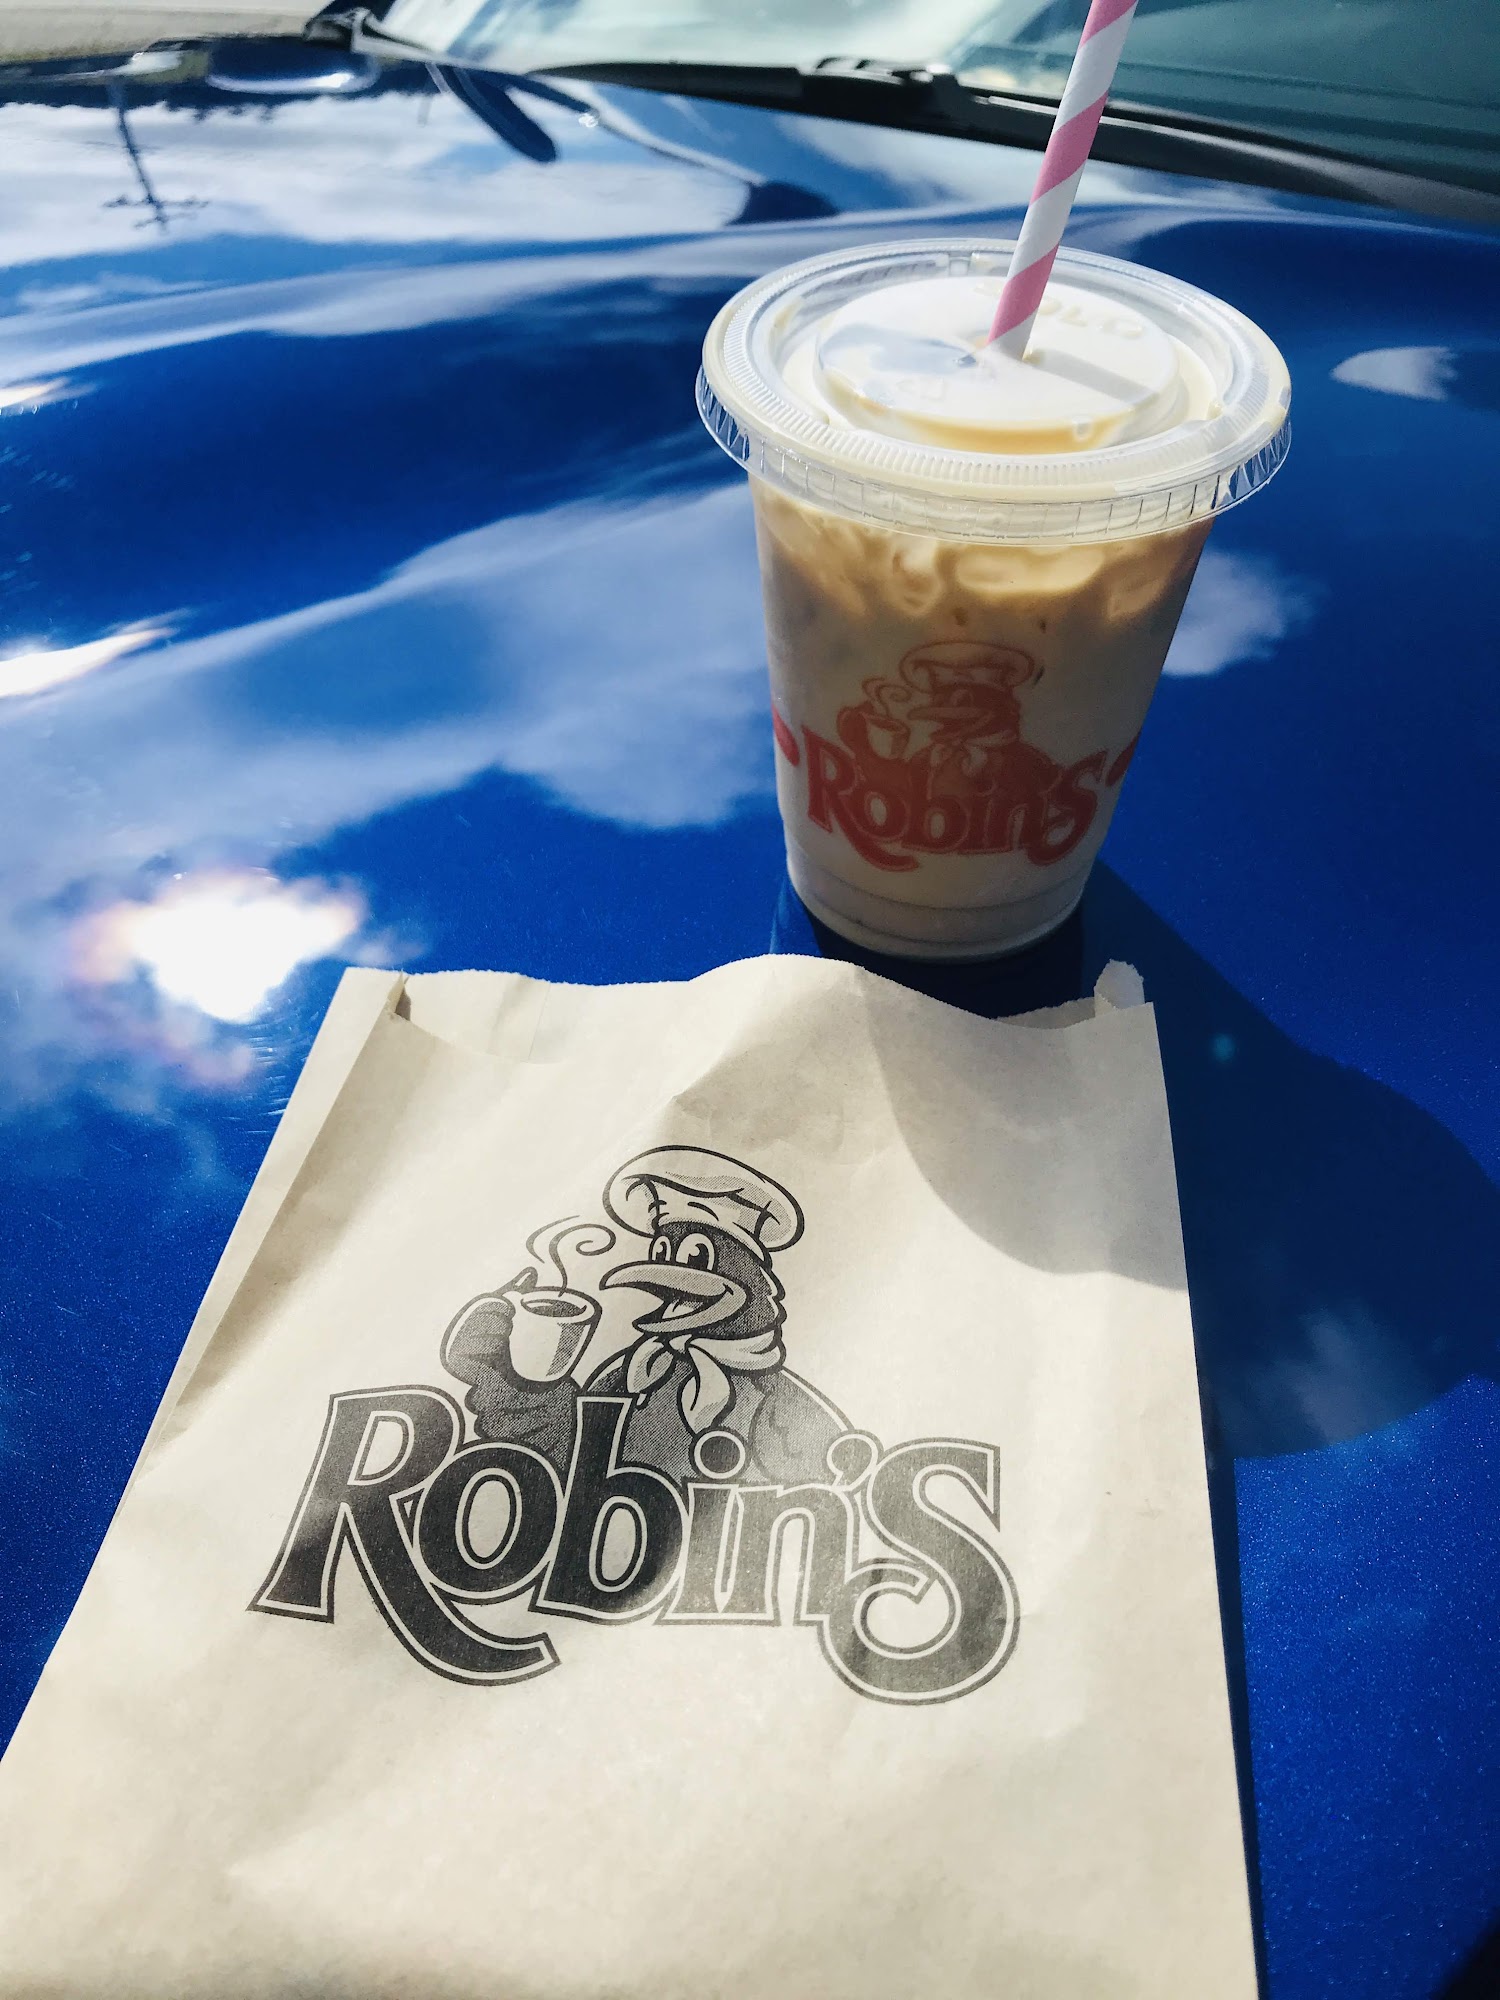 Robins Donuts